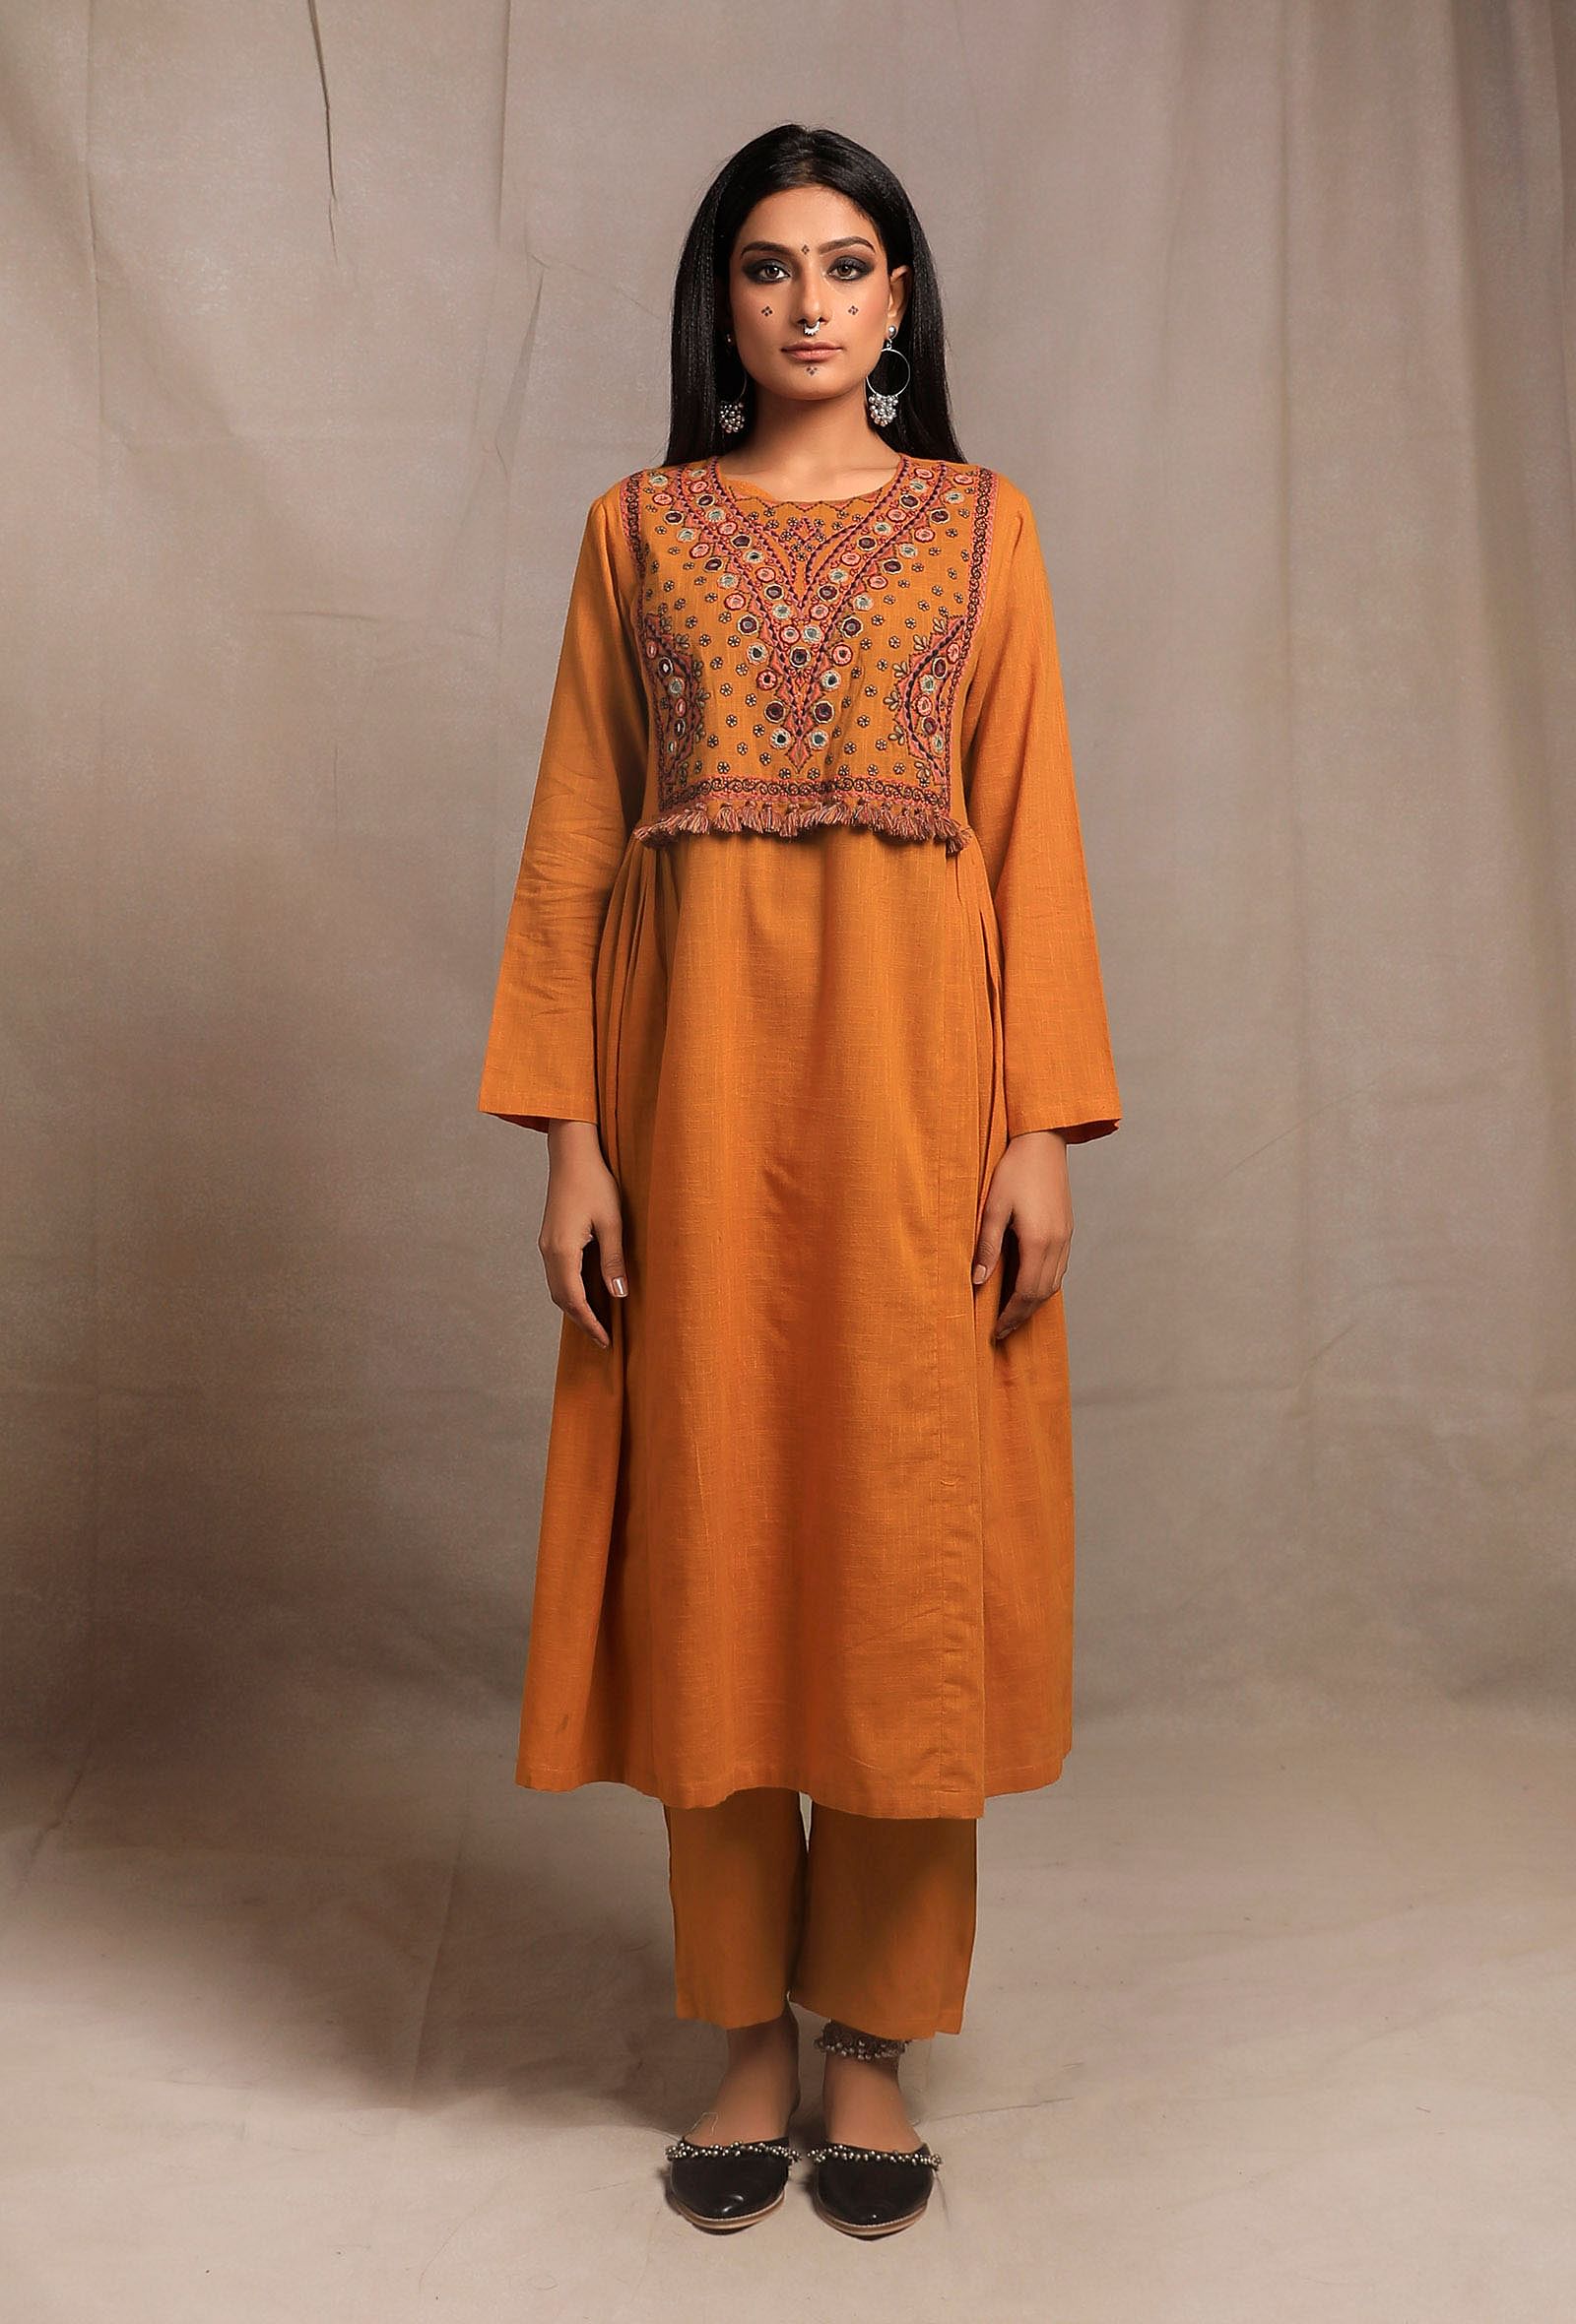 Brown silk gathered kurta-dress set with appliqué stripes along with a –  Kora India